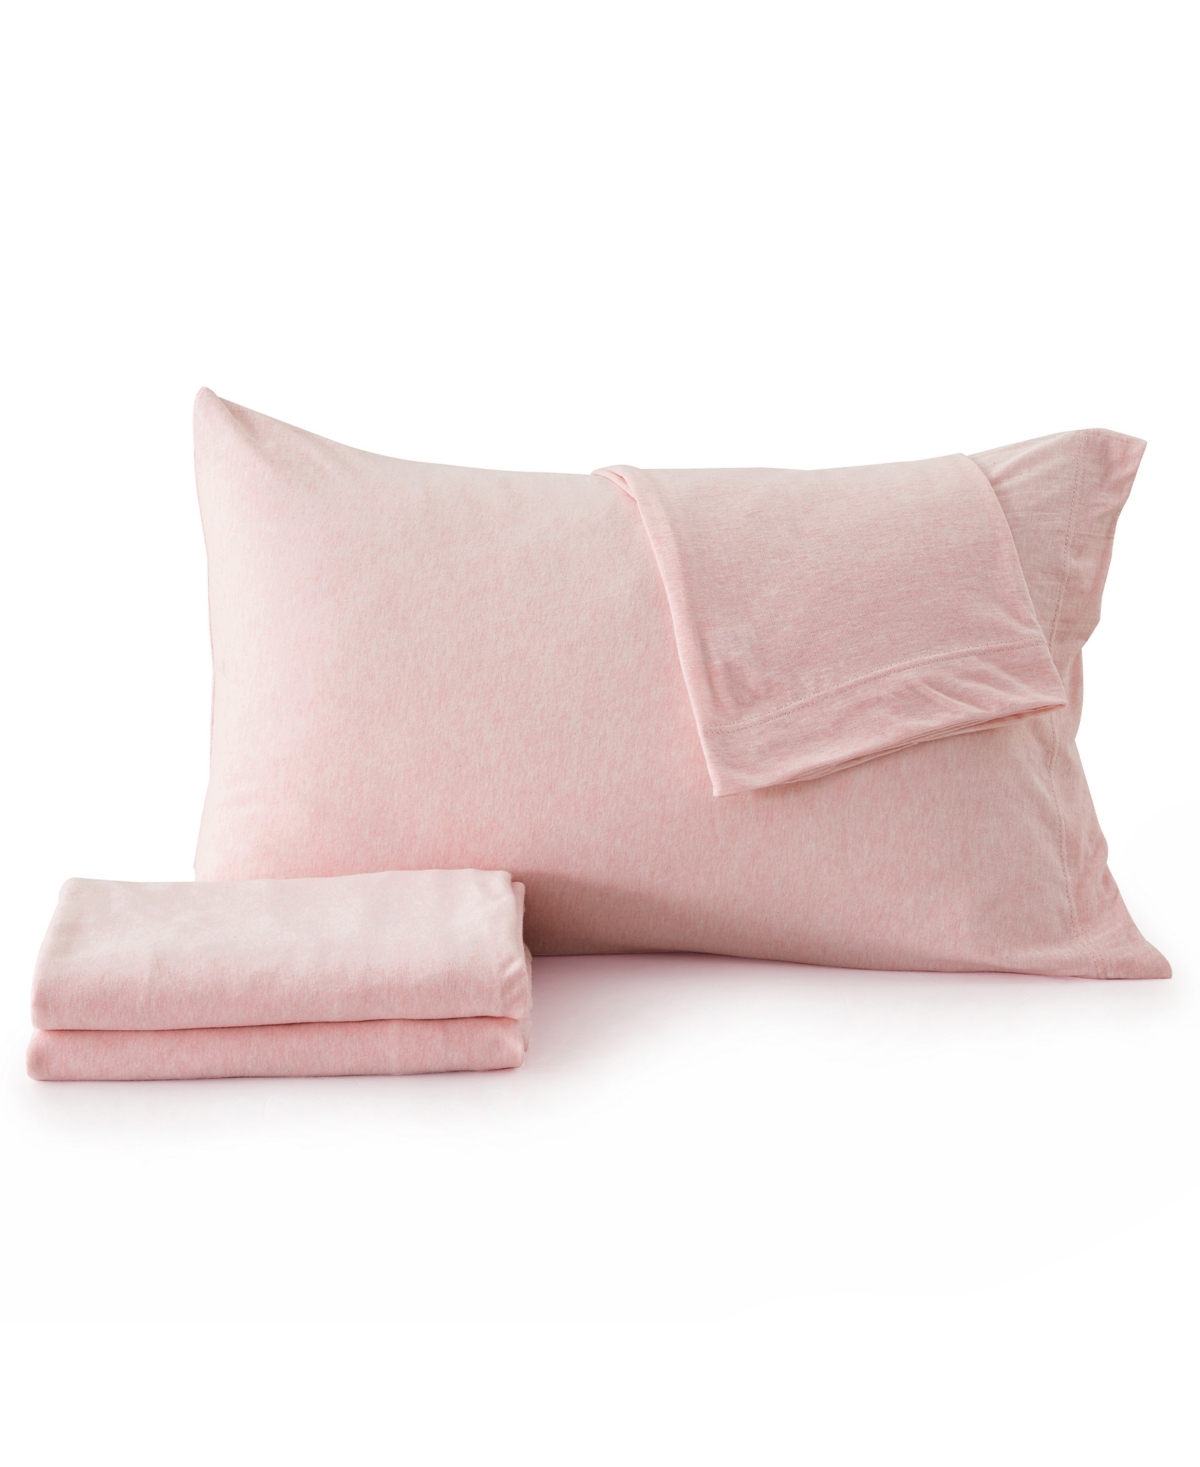 Premium Comforts Heathered Melange T-shirt Jersey Knit Cotton Blend 4 Piece Sheet Set, Queen In Pink